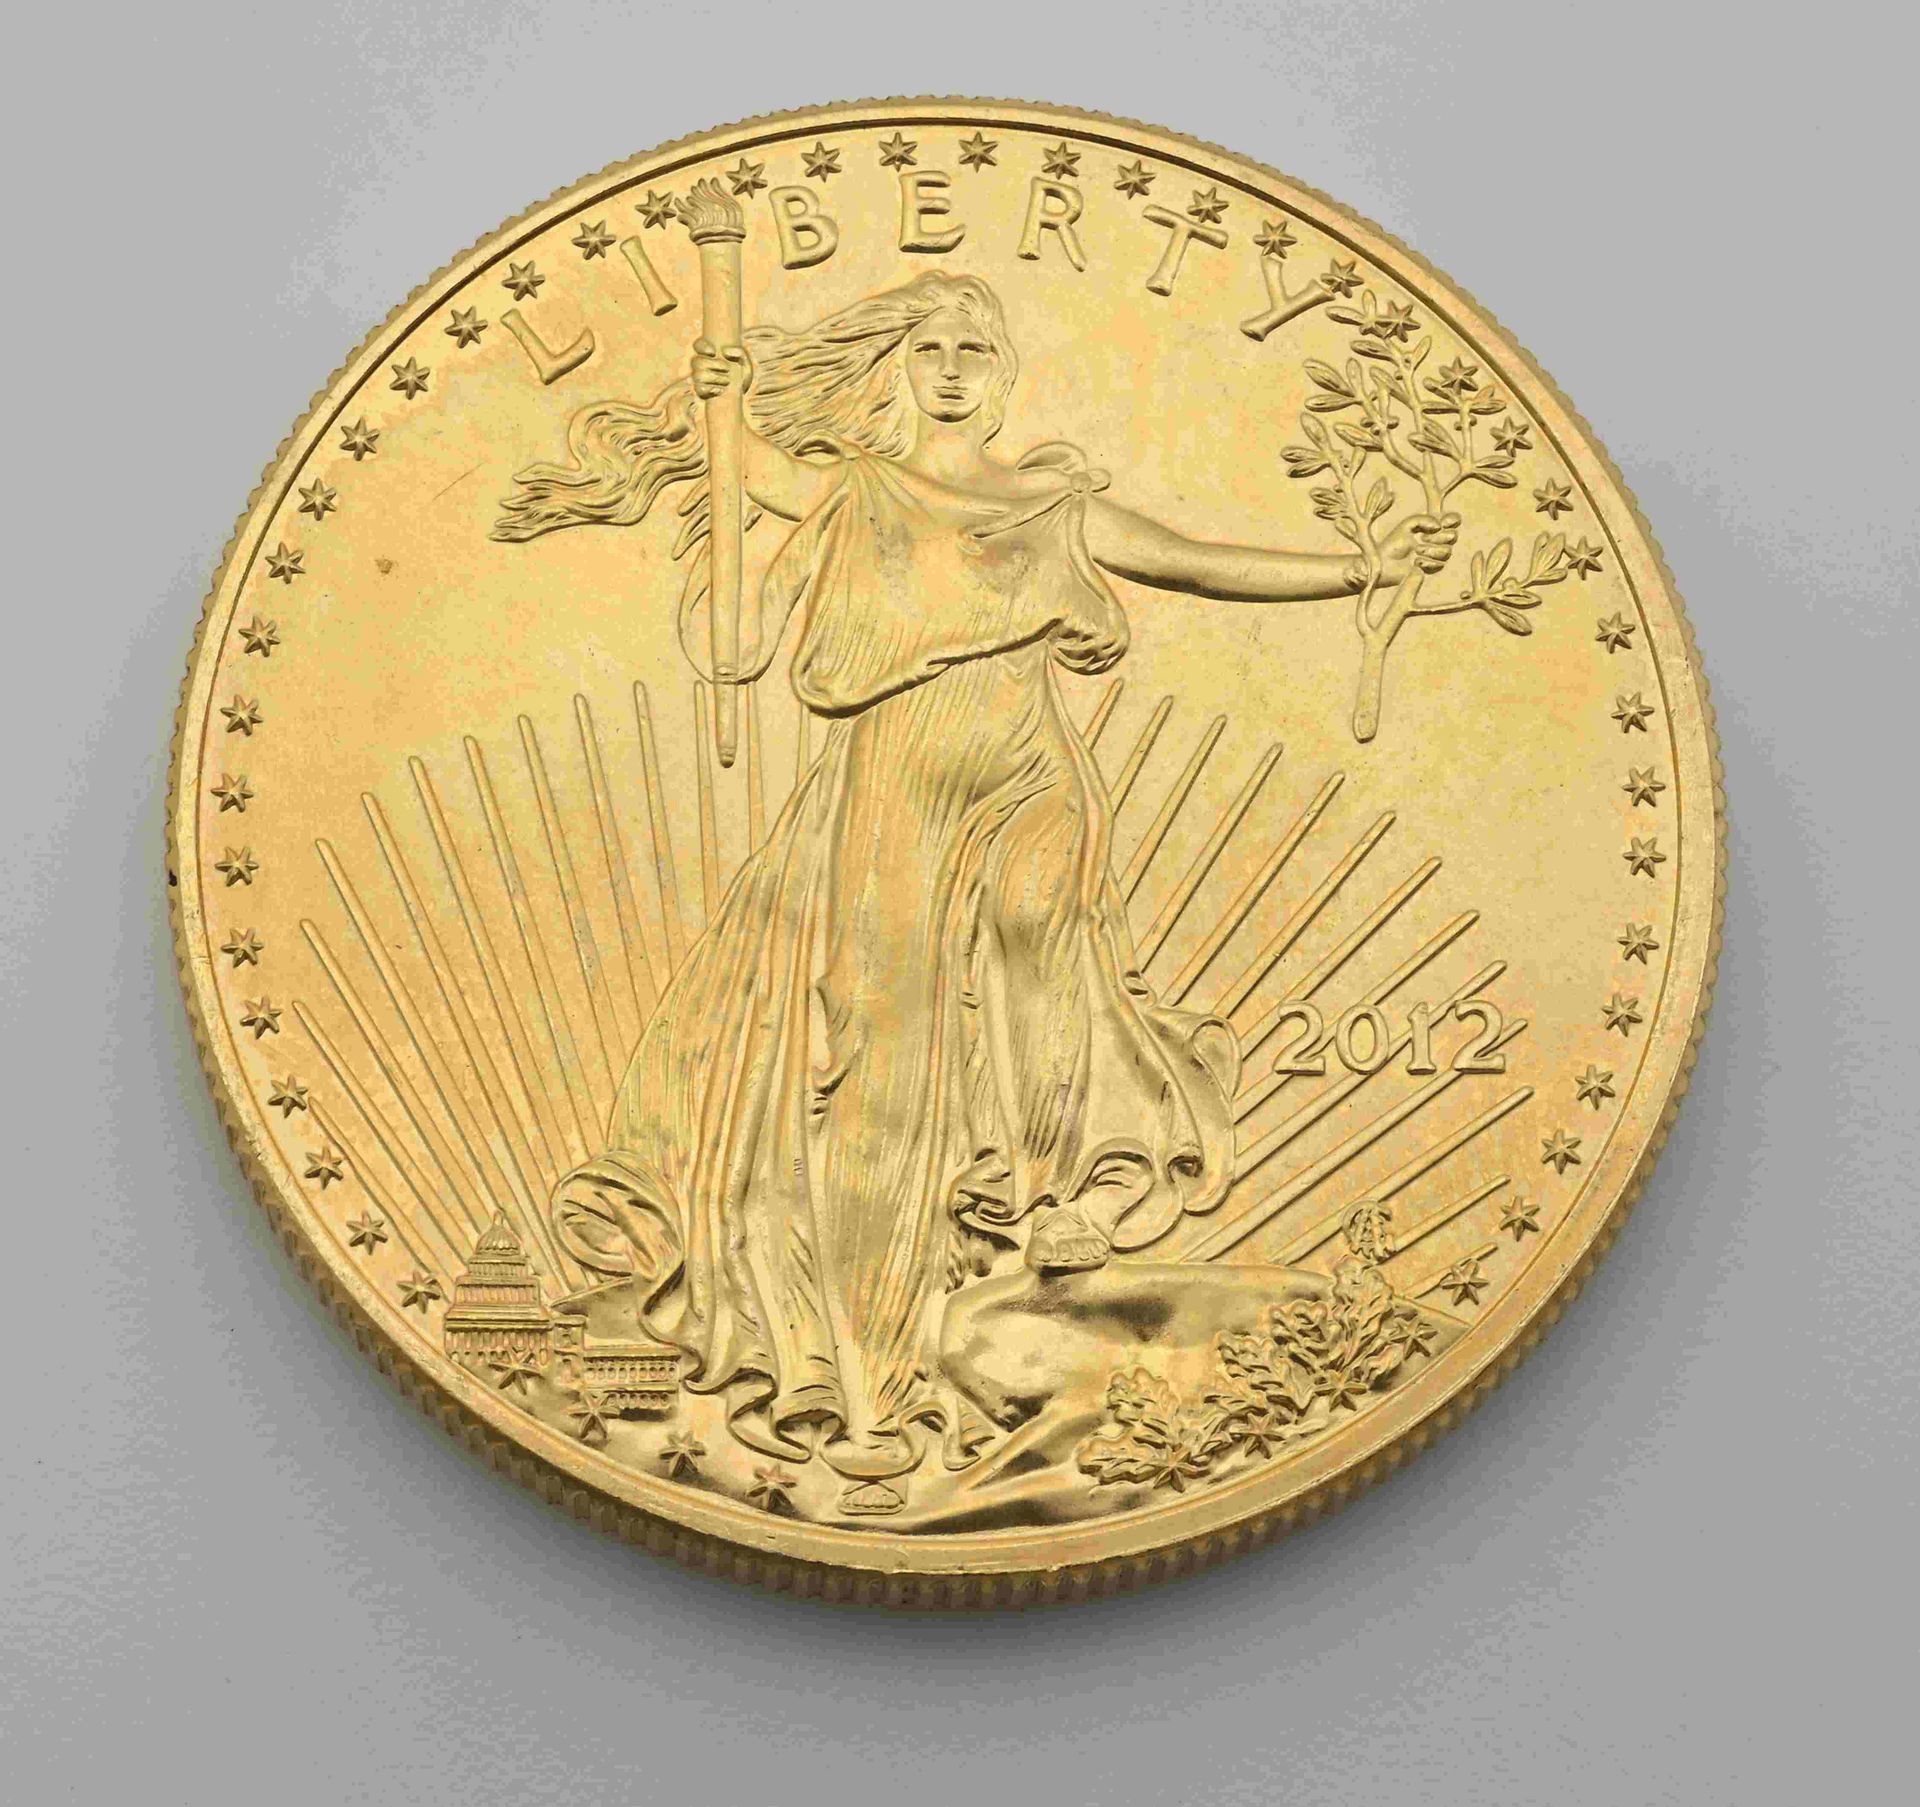 Null 50美元一盎司精制金币，2012年圣高登斯。
在独立的胶囊盒中。
状况非常好。PN : 33,89 g。 	
MARSEILLE司法法庭移交的财产

&hellip;